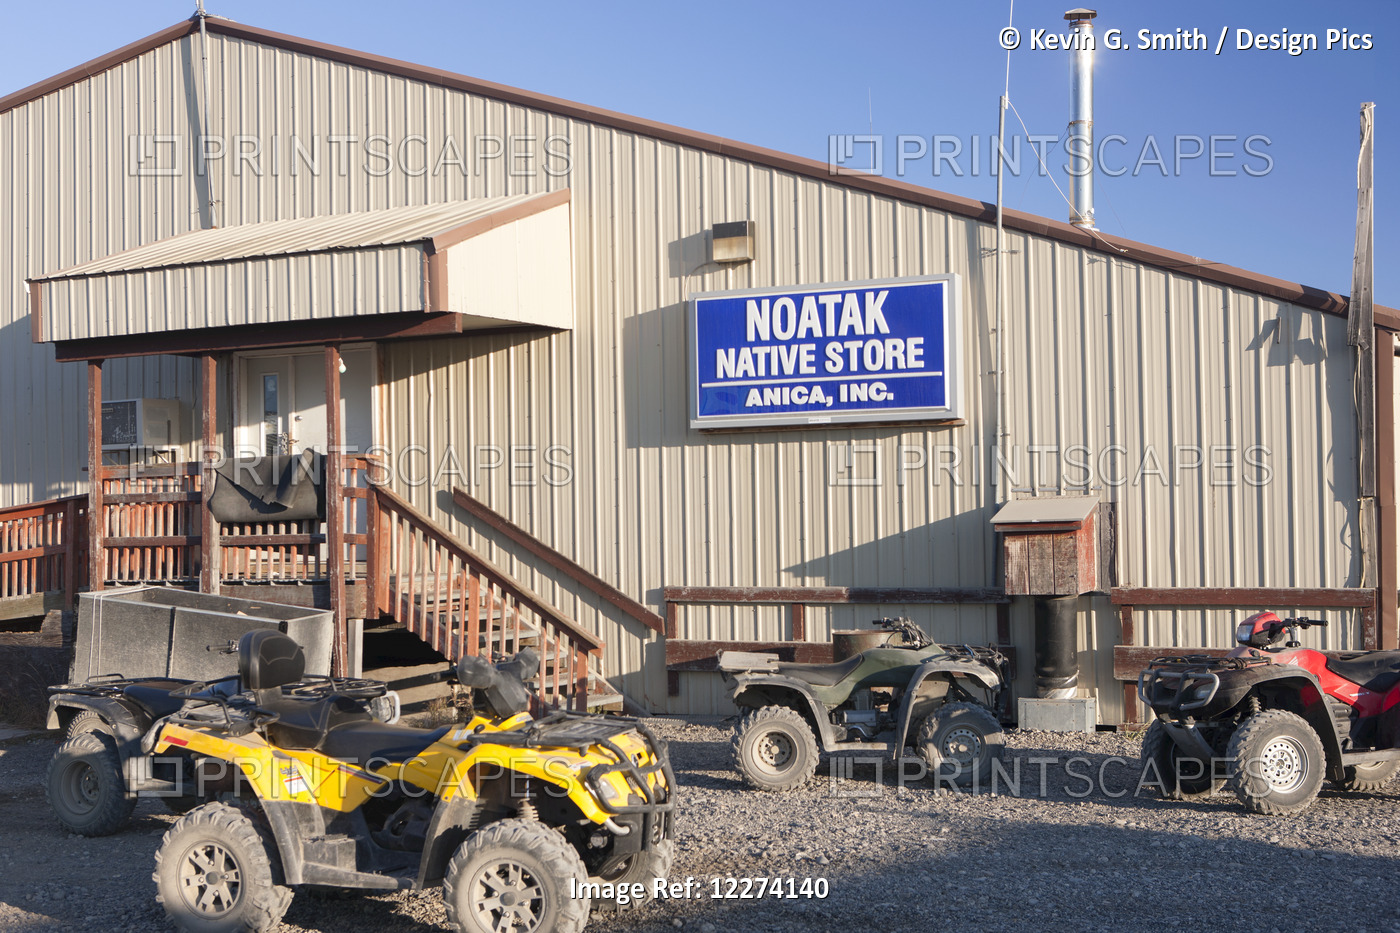 Atvs Parked Outside Of The Noatak Native Store, Noatak, Arctic Alaska, USA, Fall